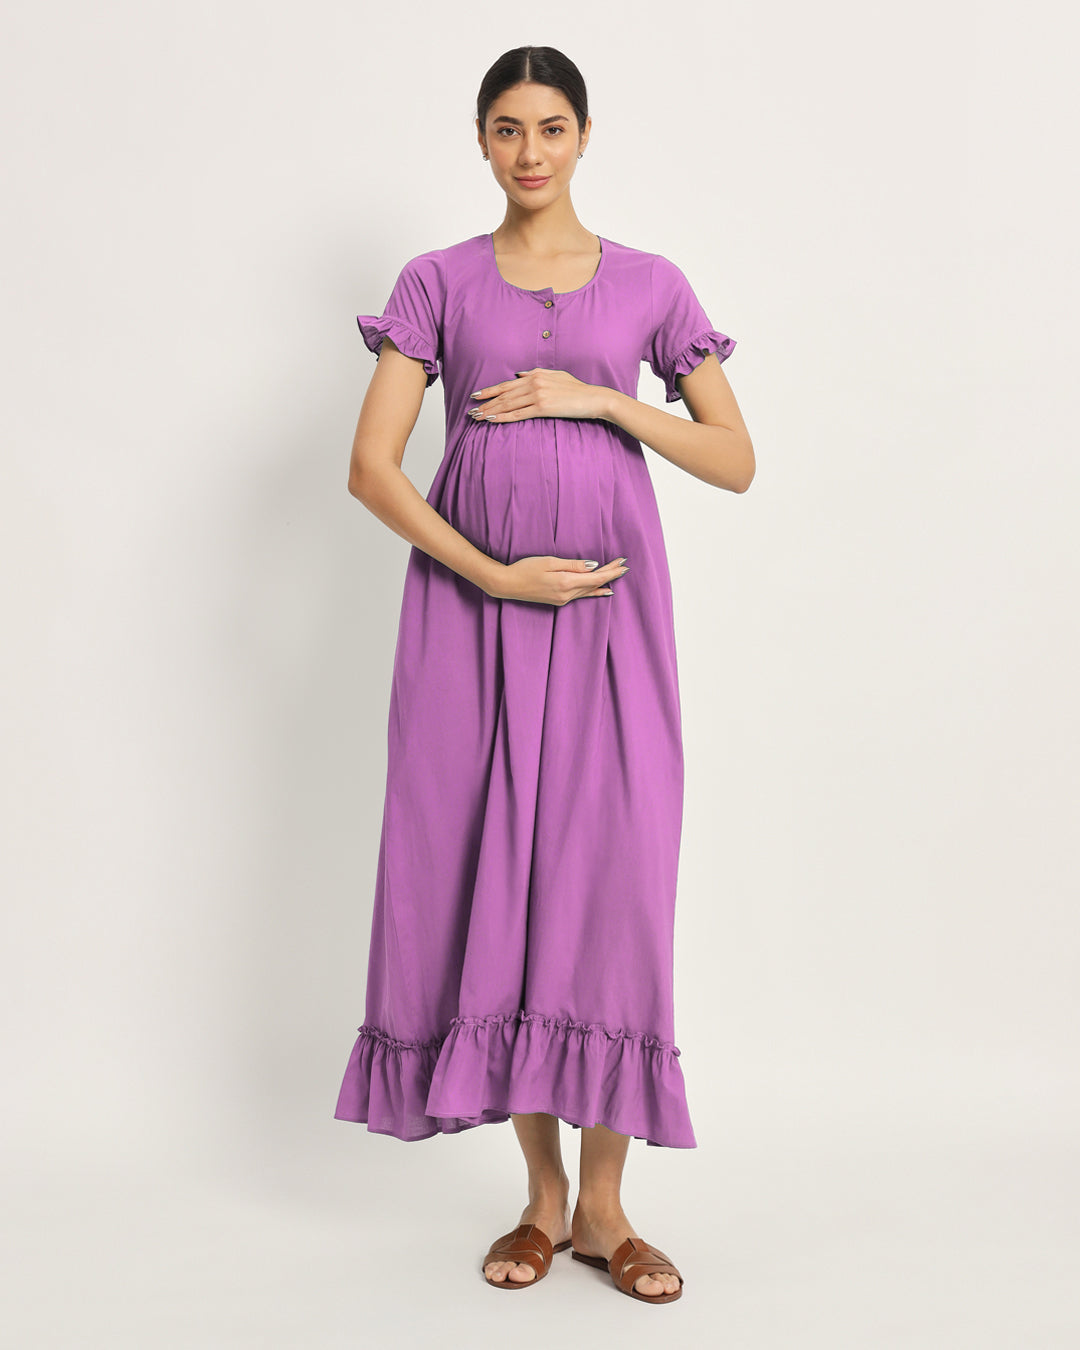 Wisteria Bumpin' & Stylin' Maternity & Nursing Dress